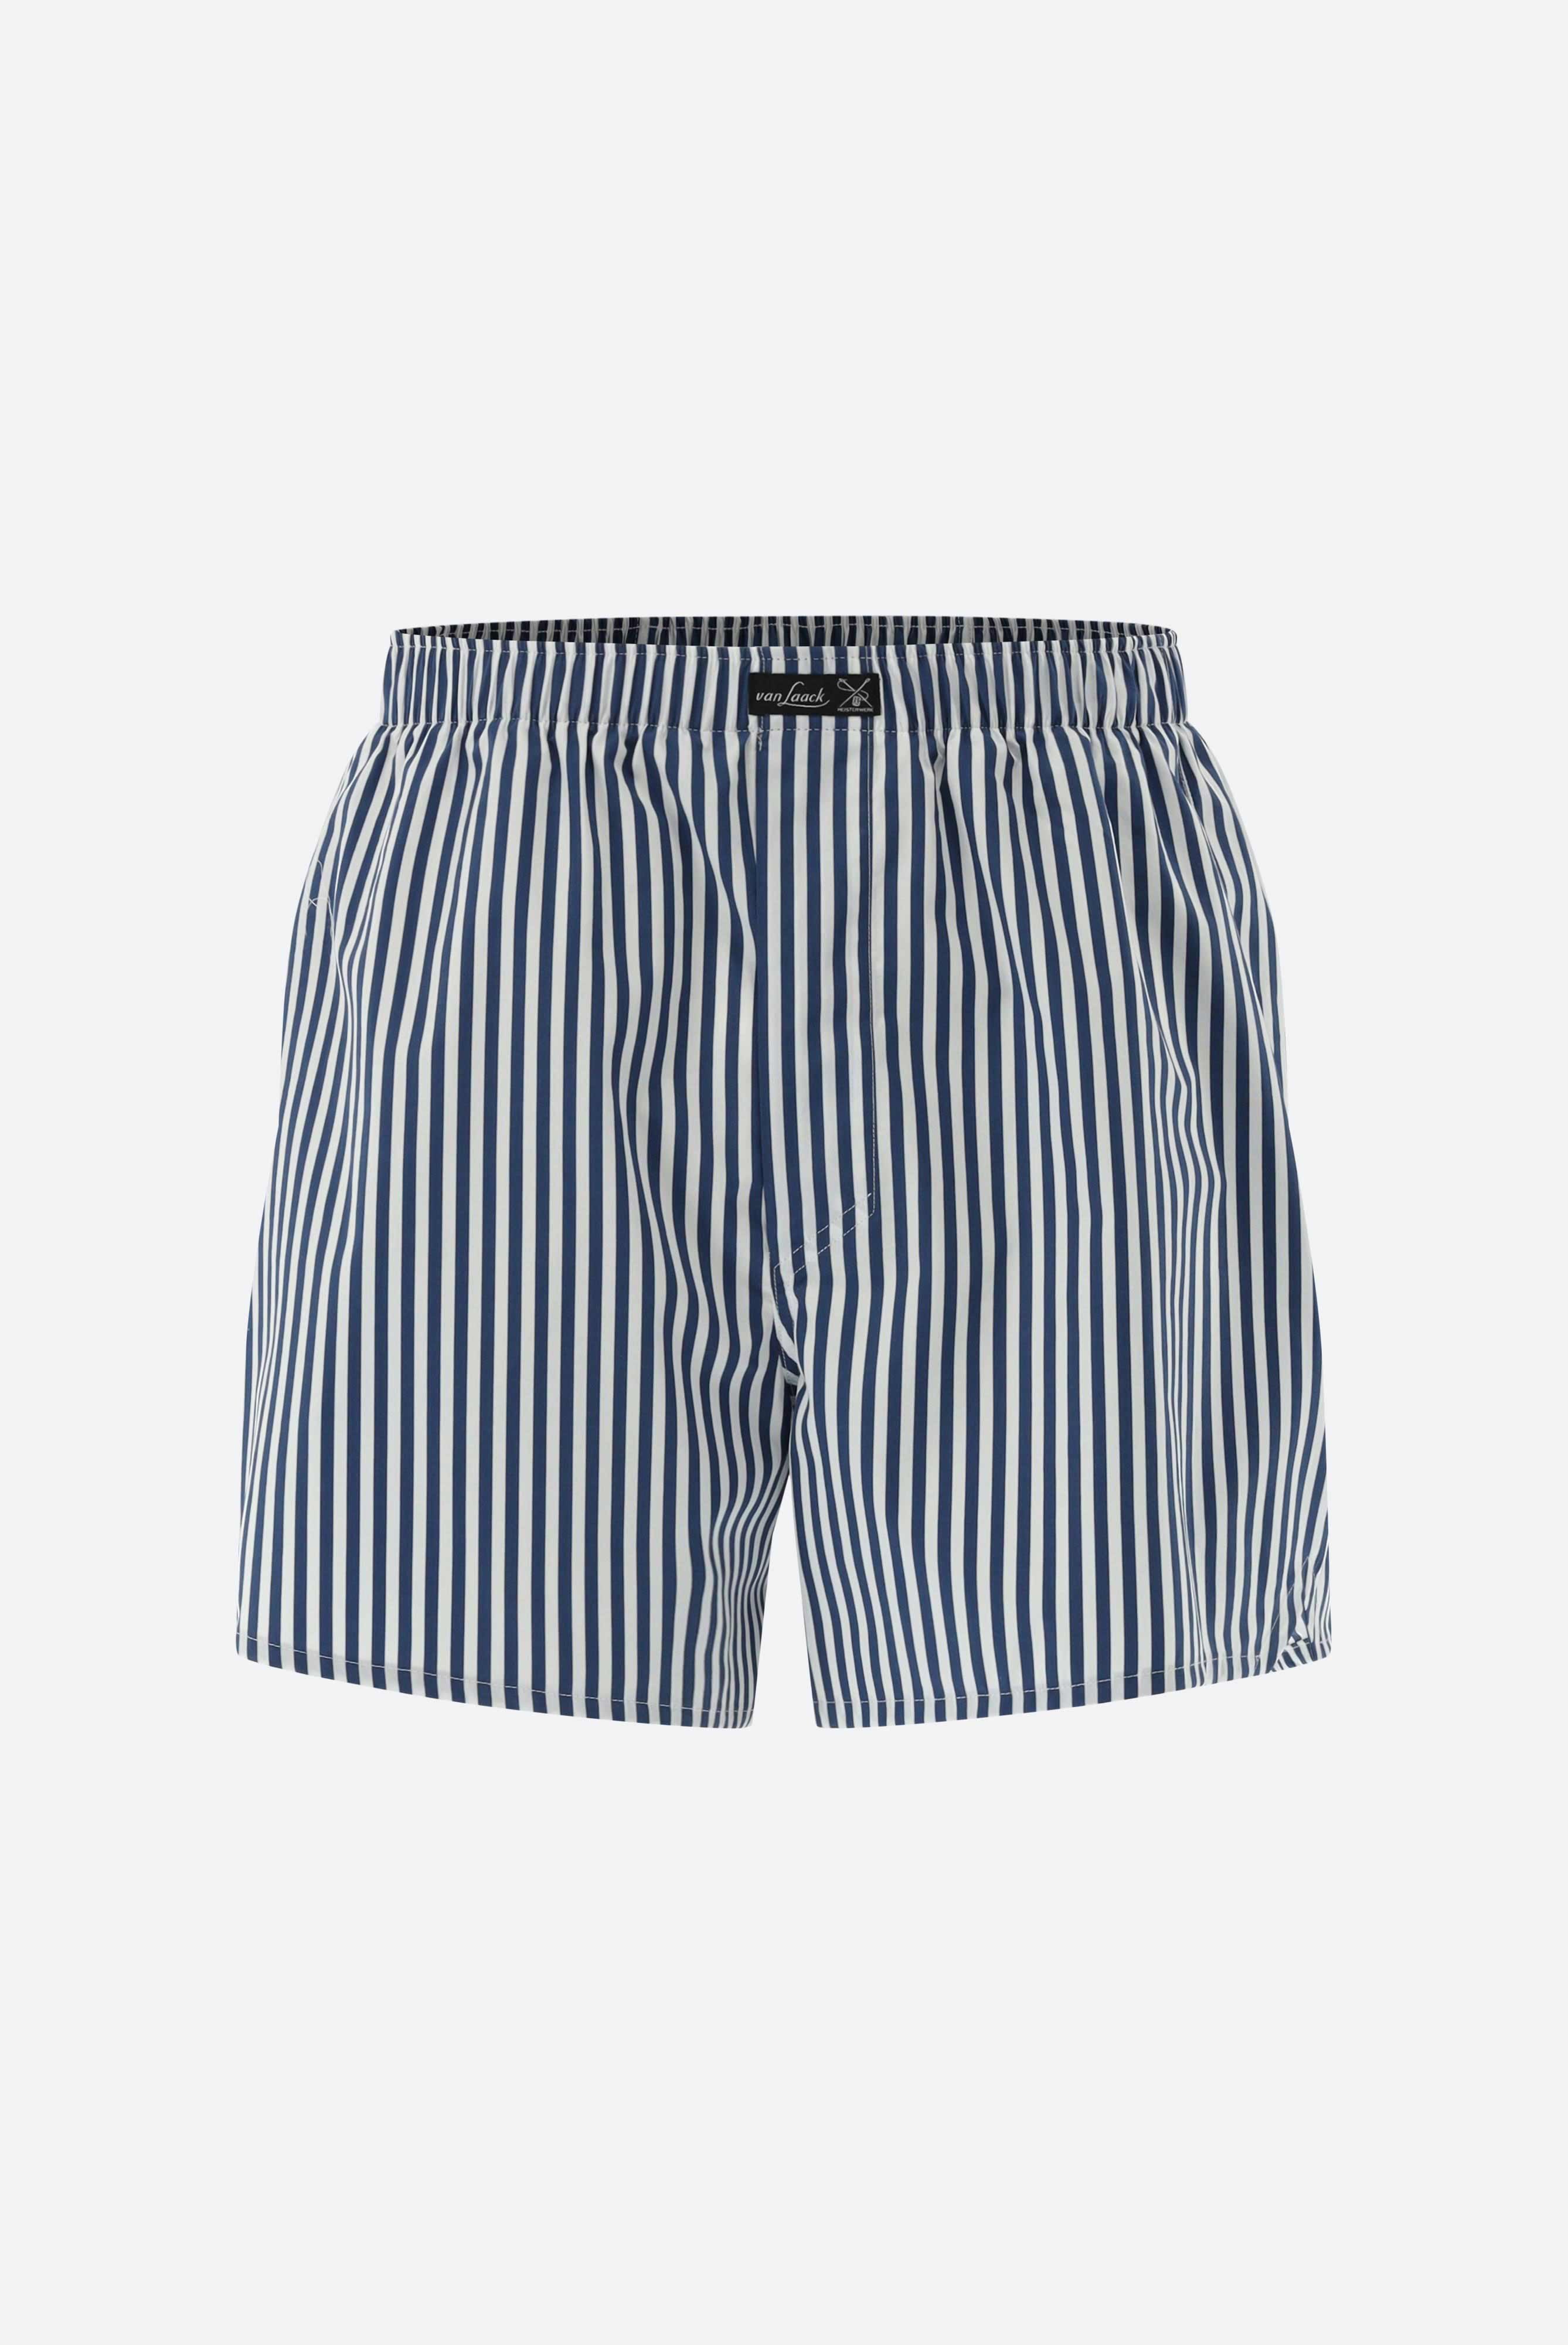 Underwear+Striped Poplin Boxer Shorts+91.1100..170275.780.46